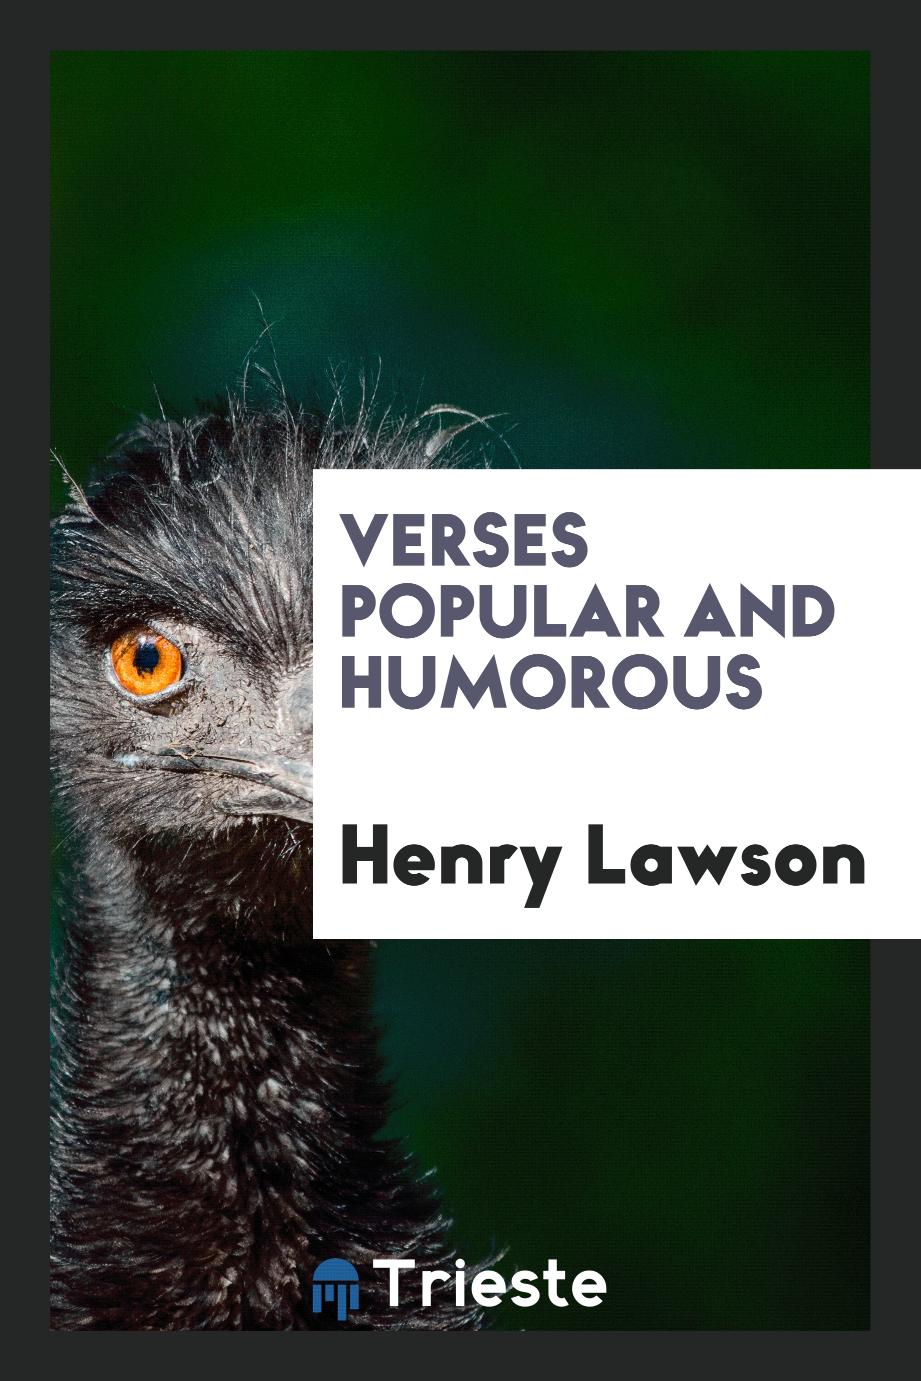 Verses popular and humorous